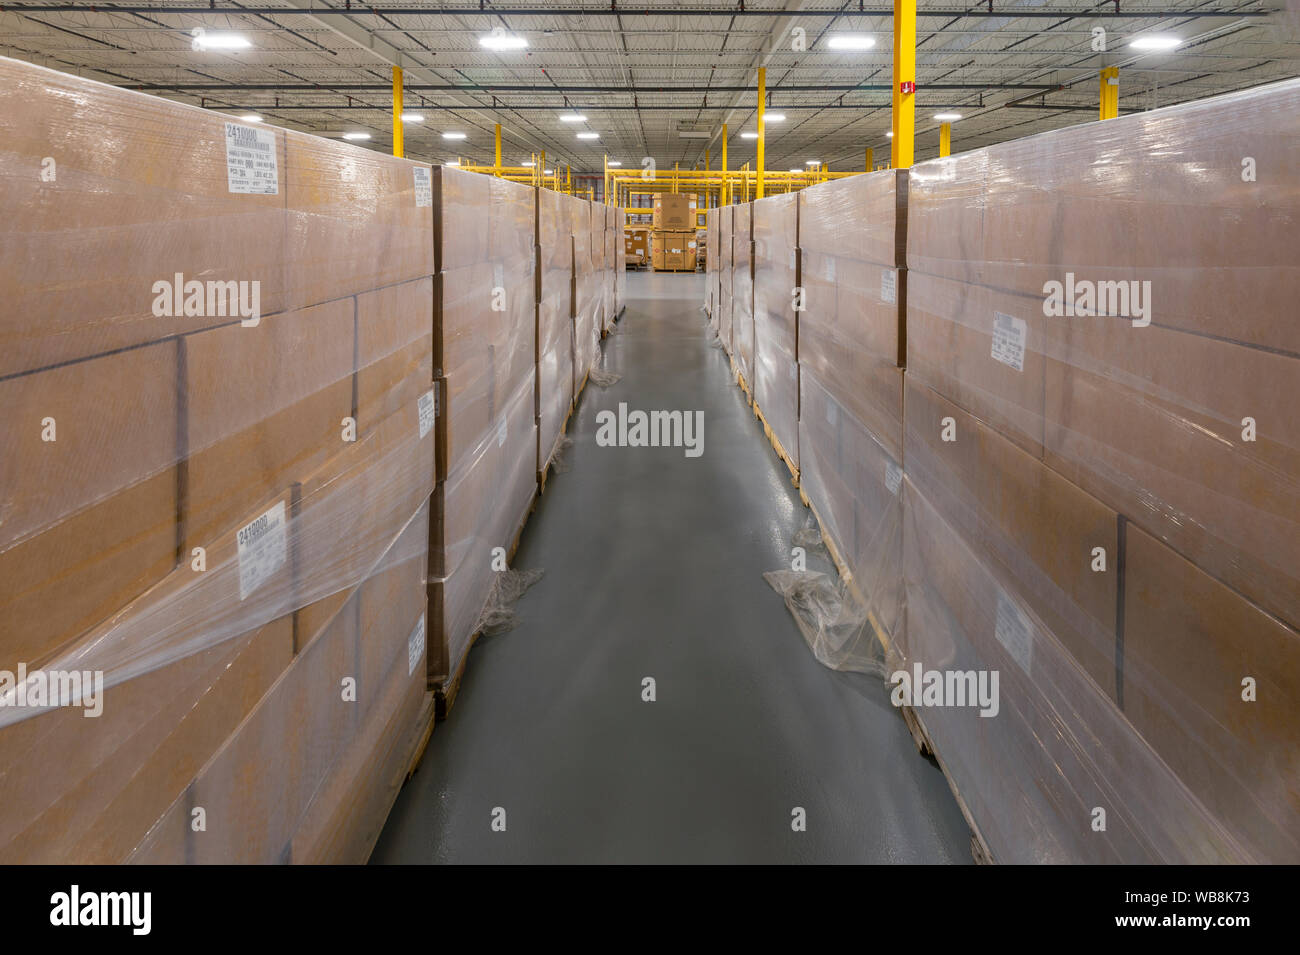 Rangées de stacked boxes in warehouse Banque D'Images